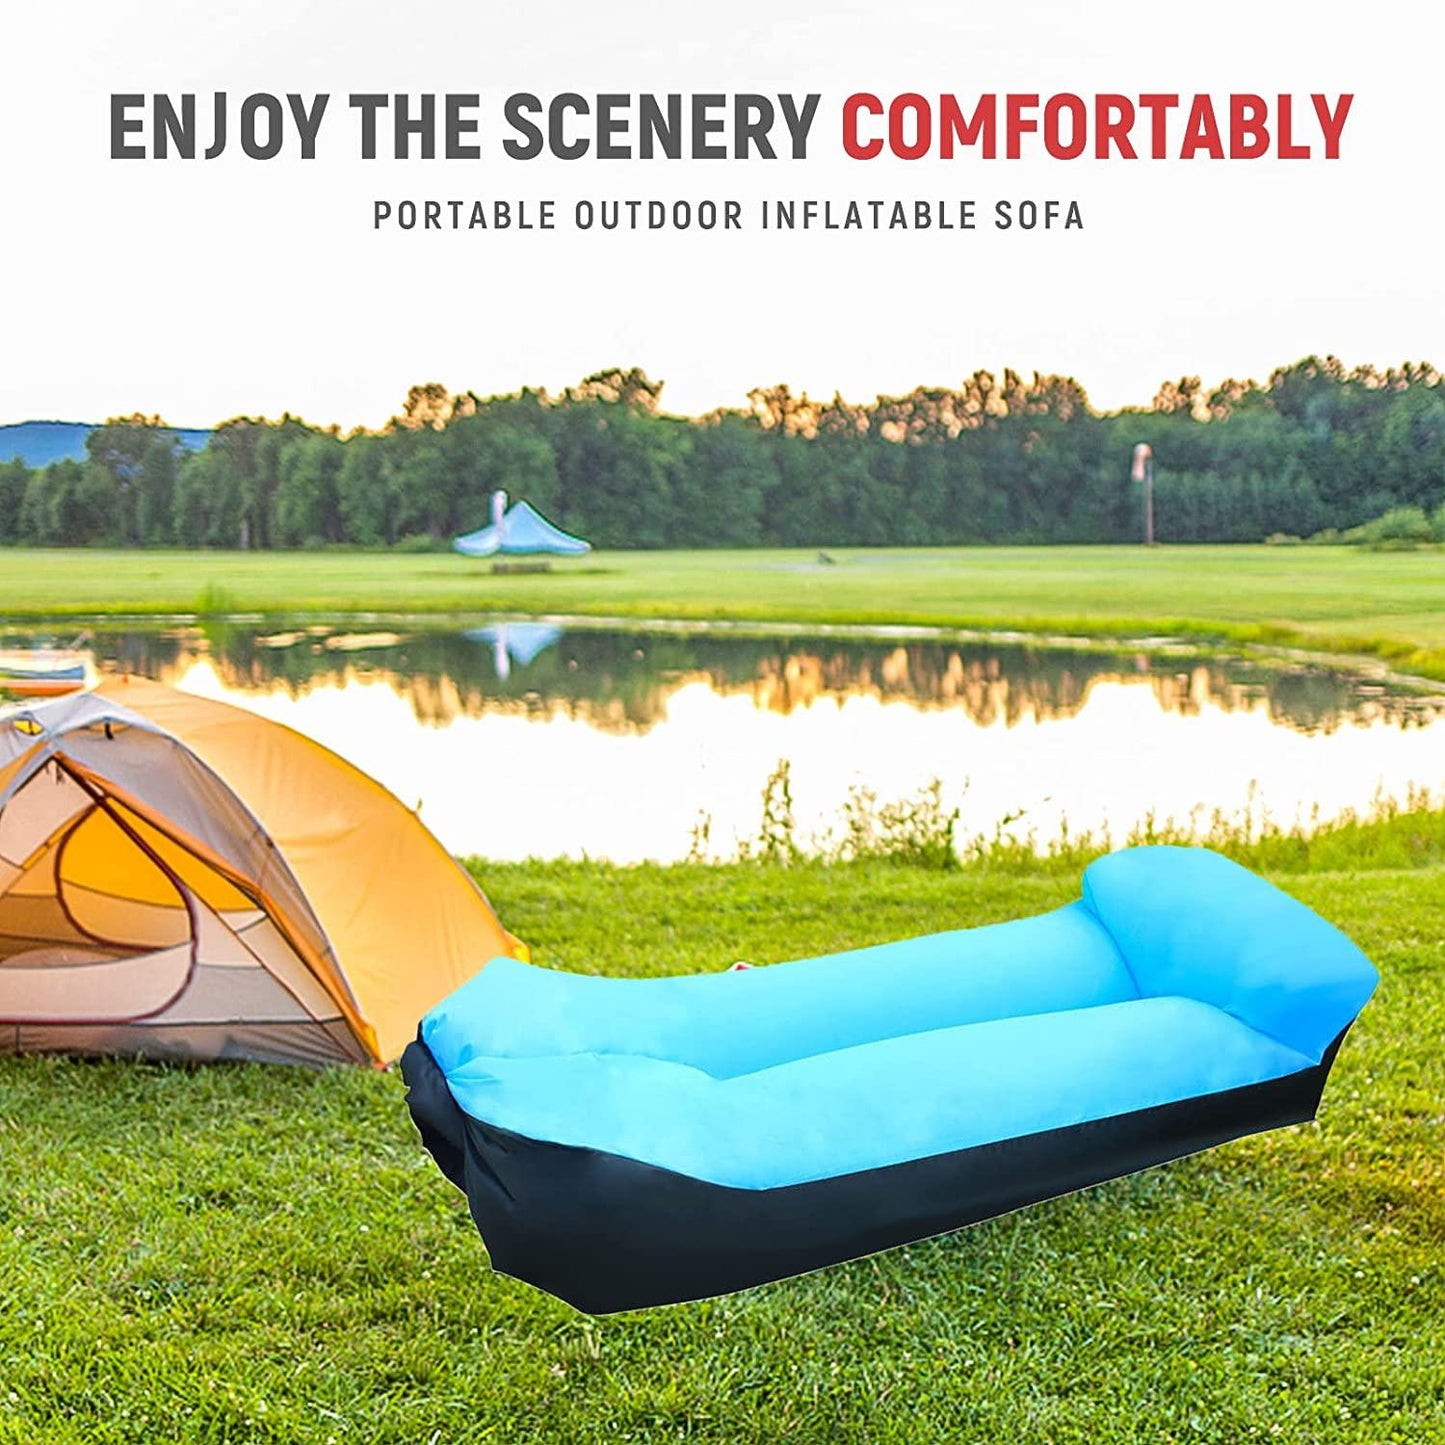 Portable relaxation spot: inflatable air sofa hammock